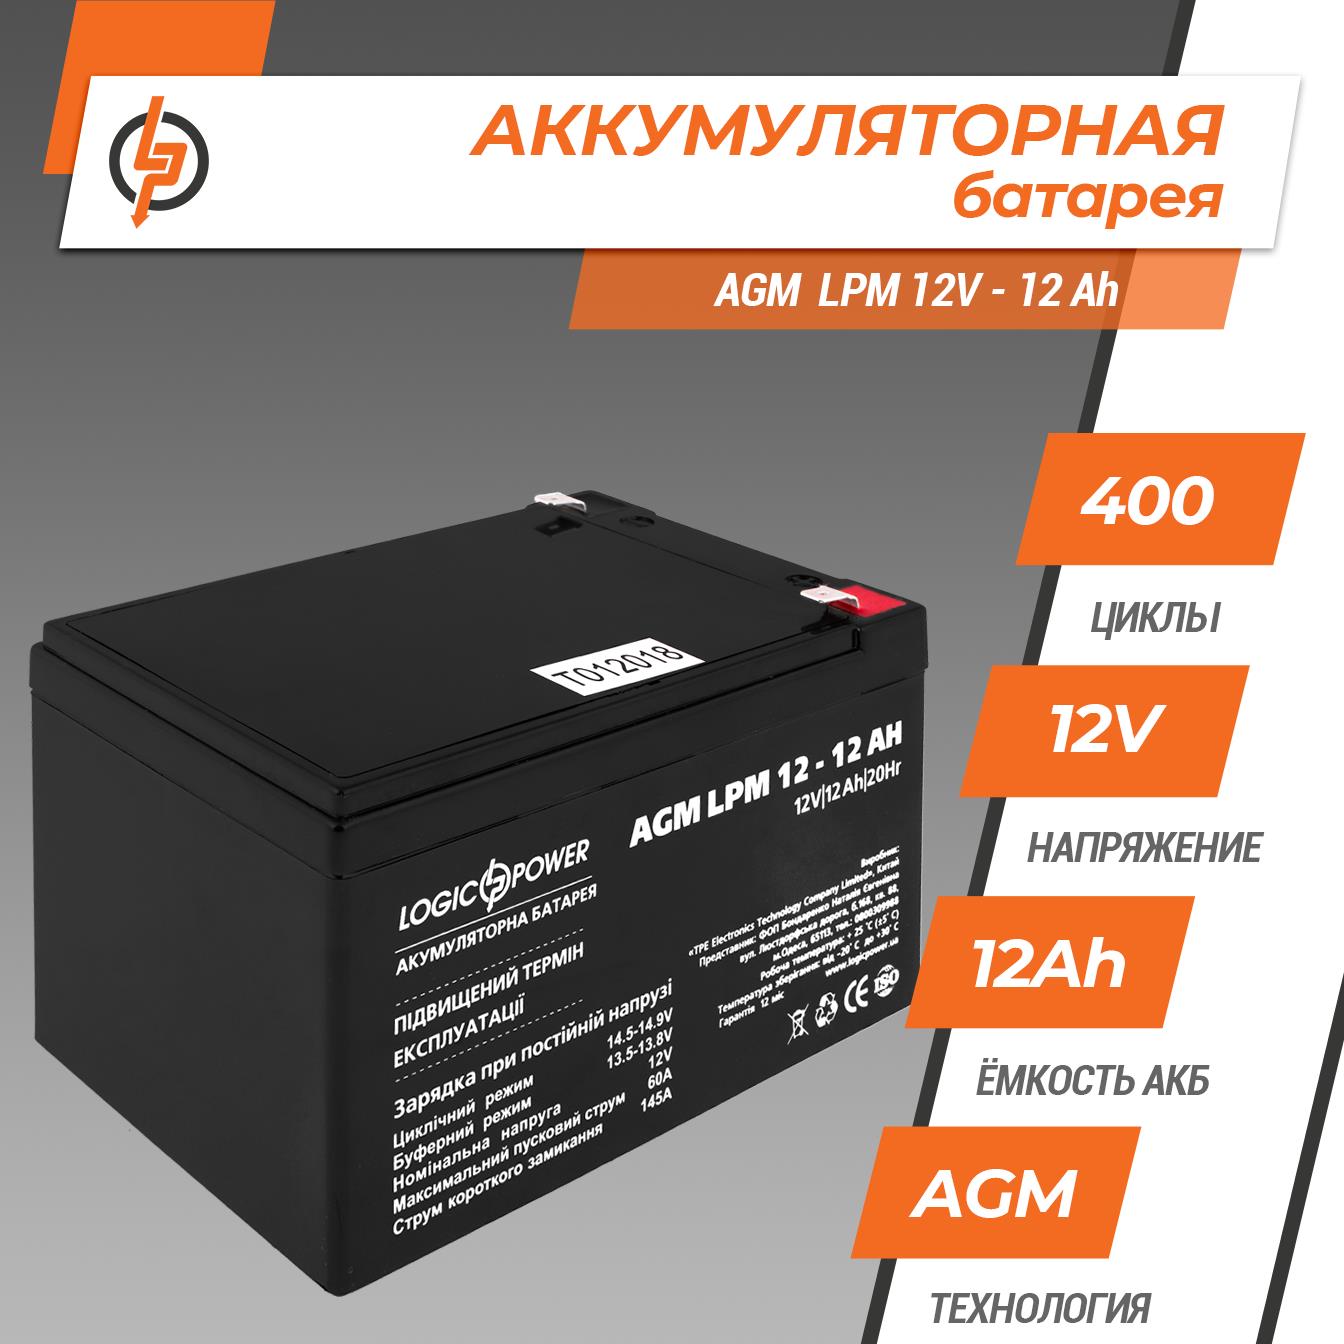 Аккумулятор свинцово-кислотный LogicPower AGM LPM 12V - 12 Ah (6550) цена 1240.00 грн - фотография 2